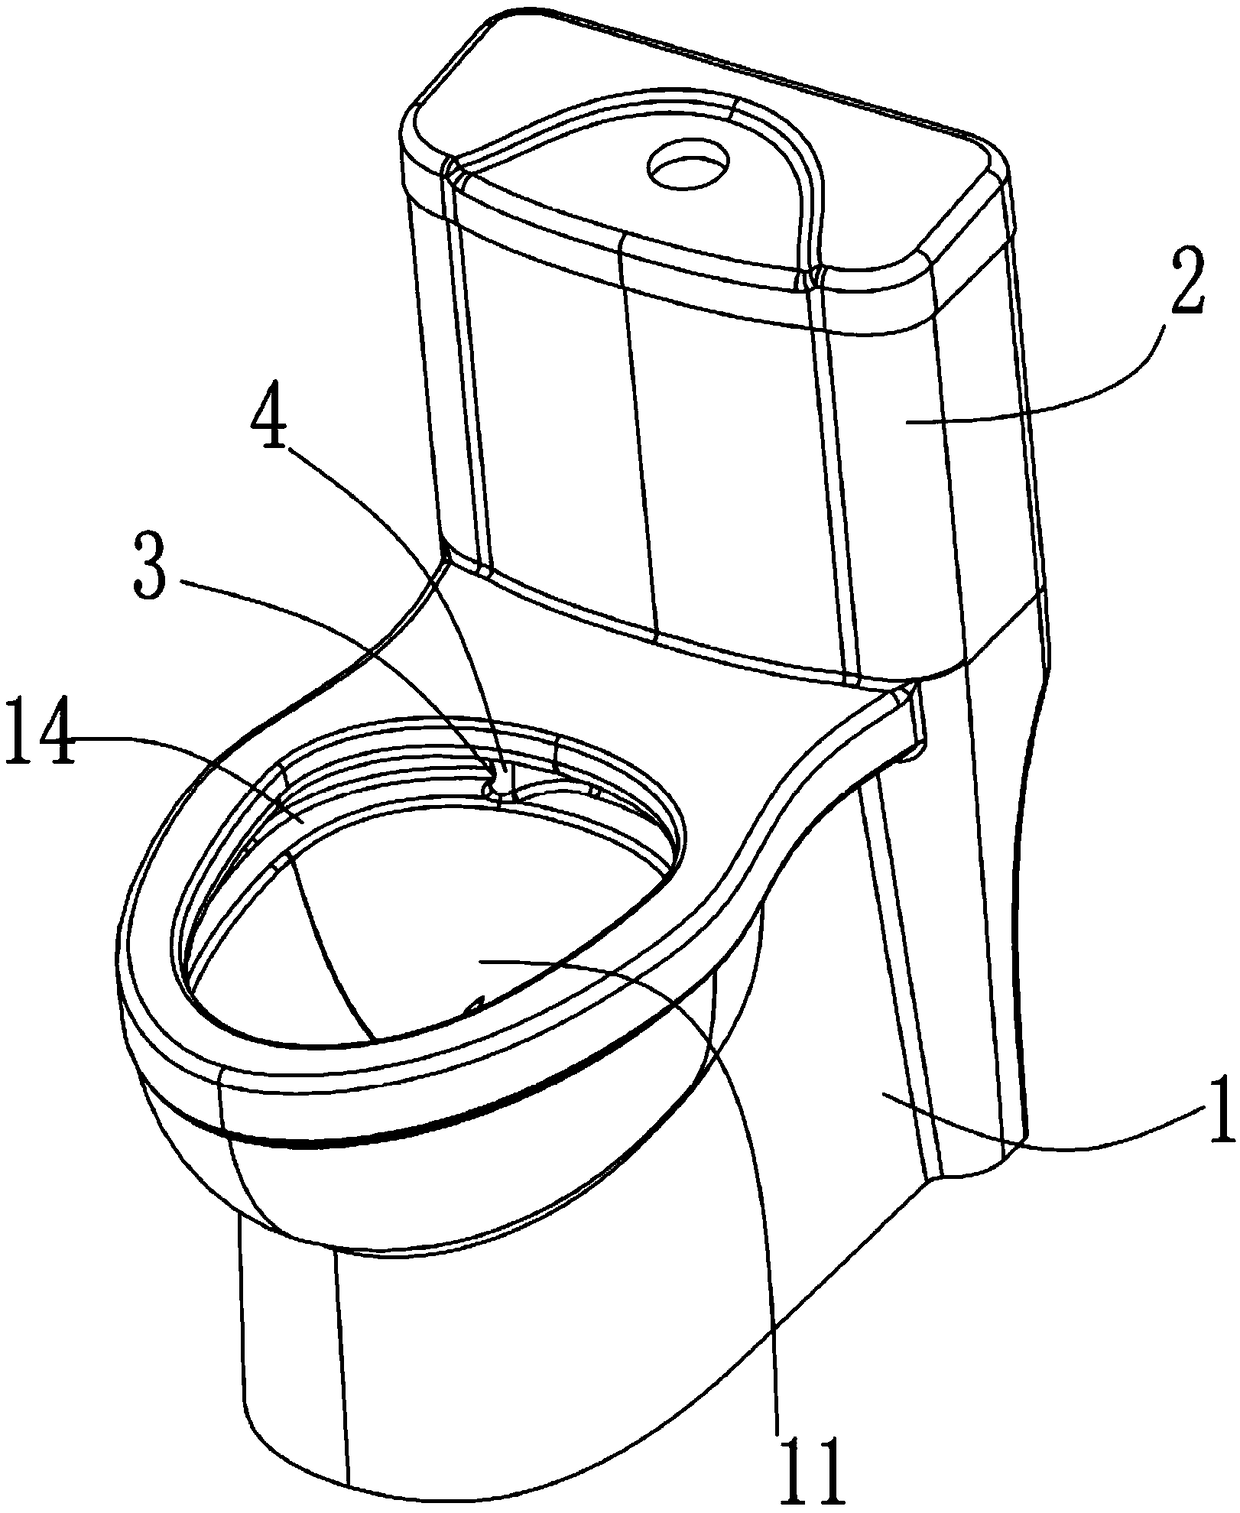 A water-saving toilet bowl